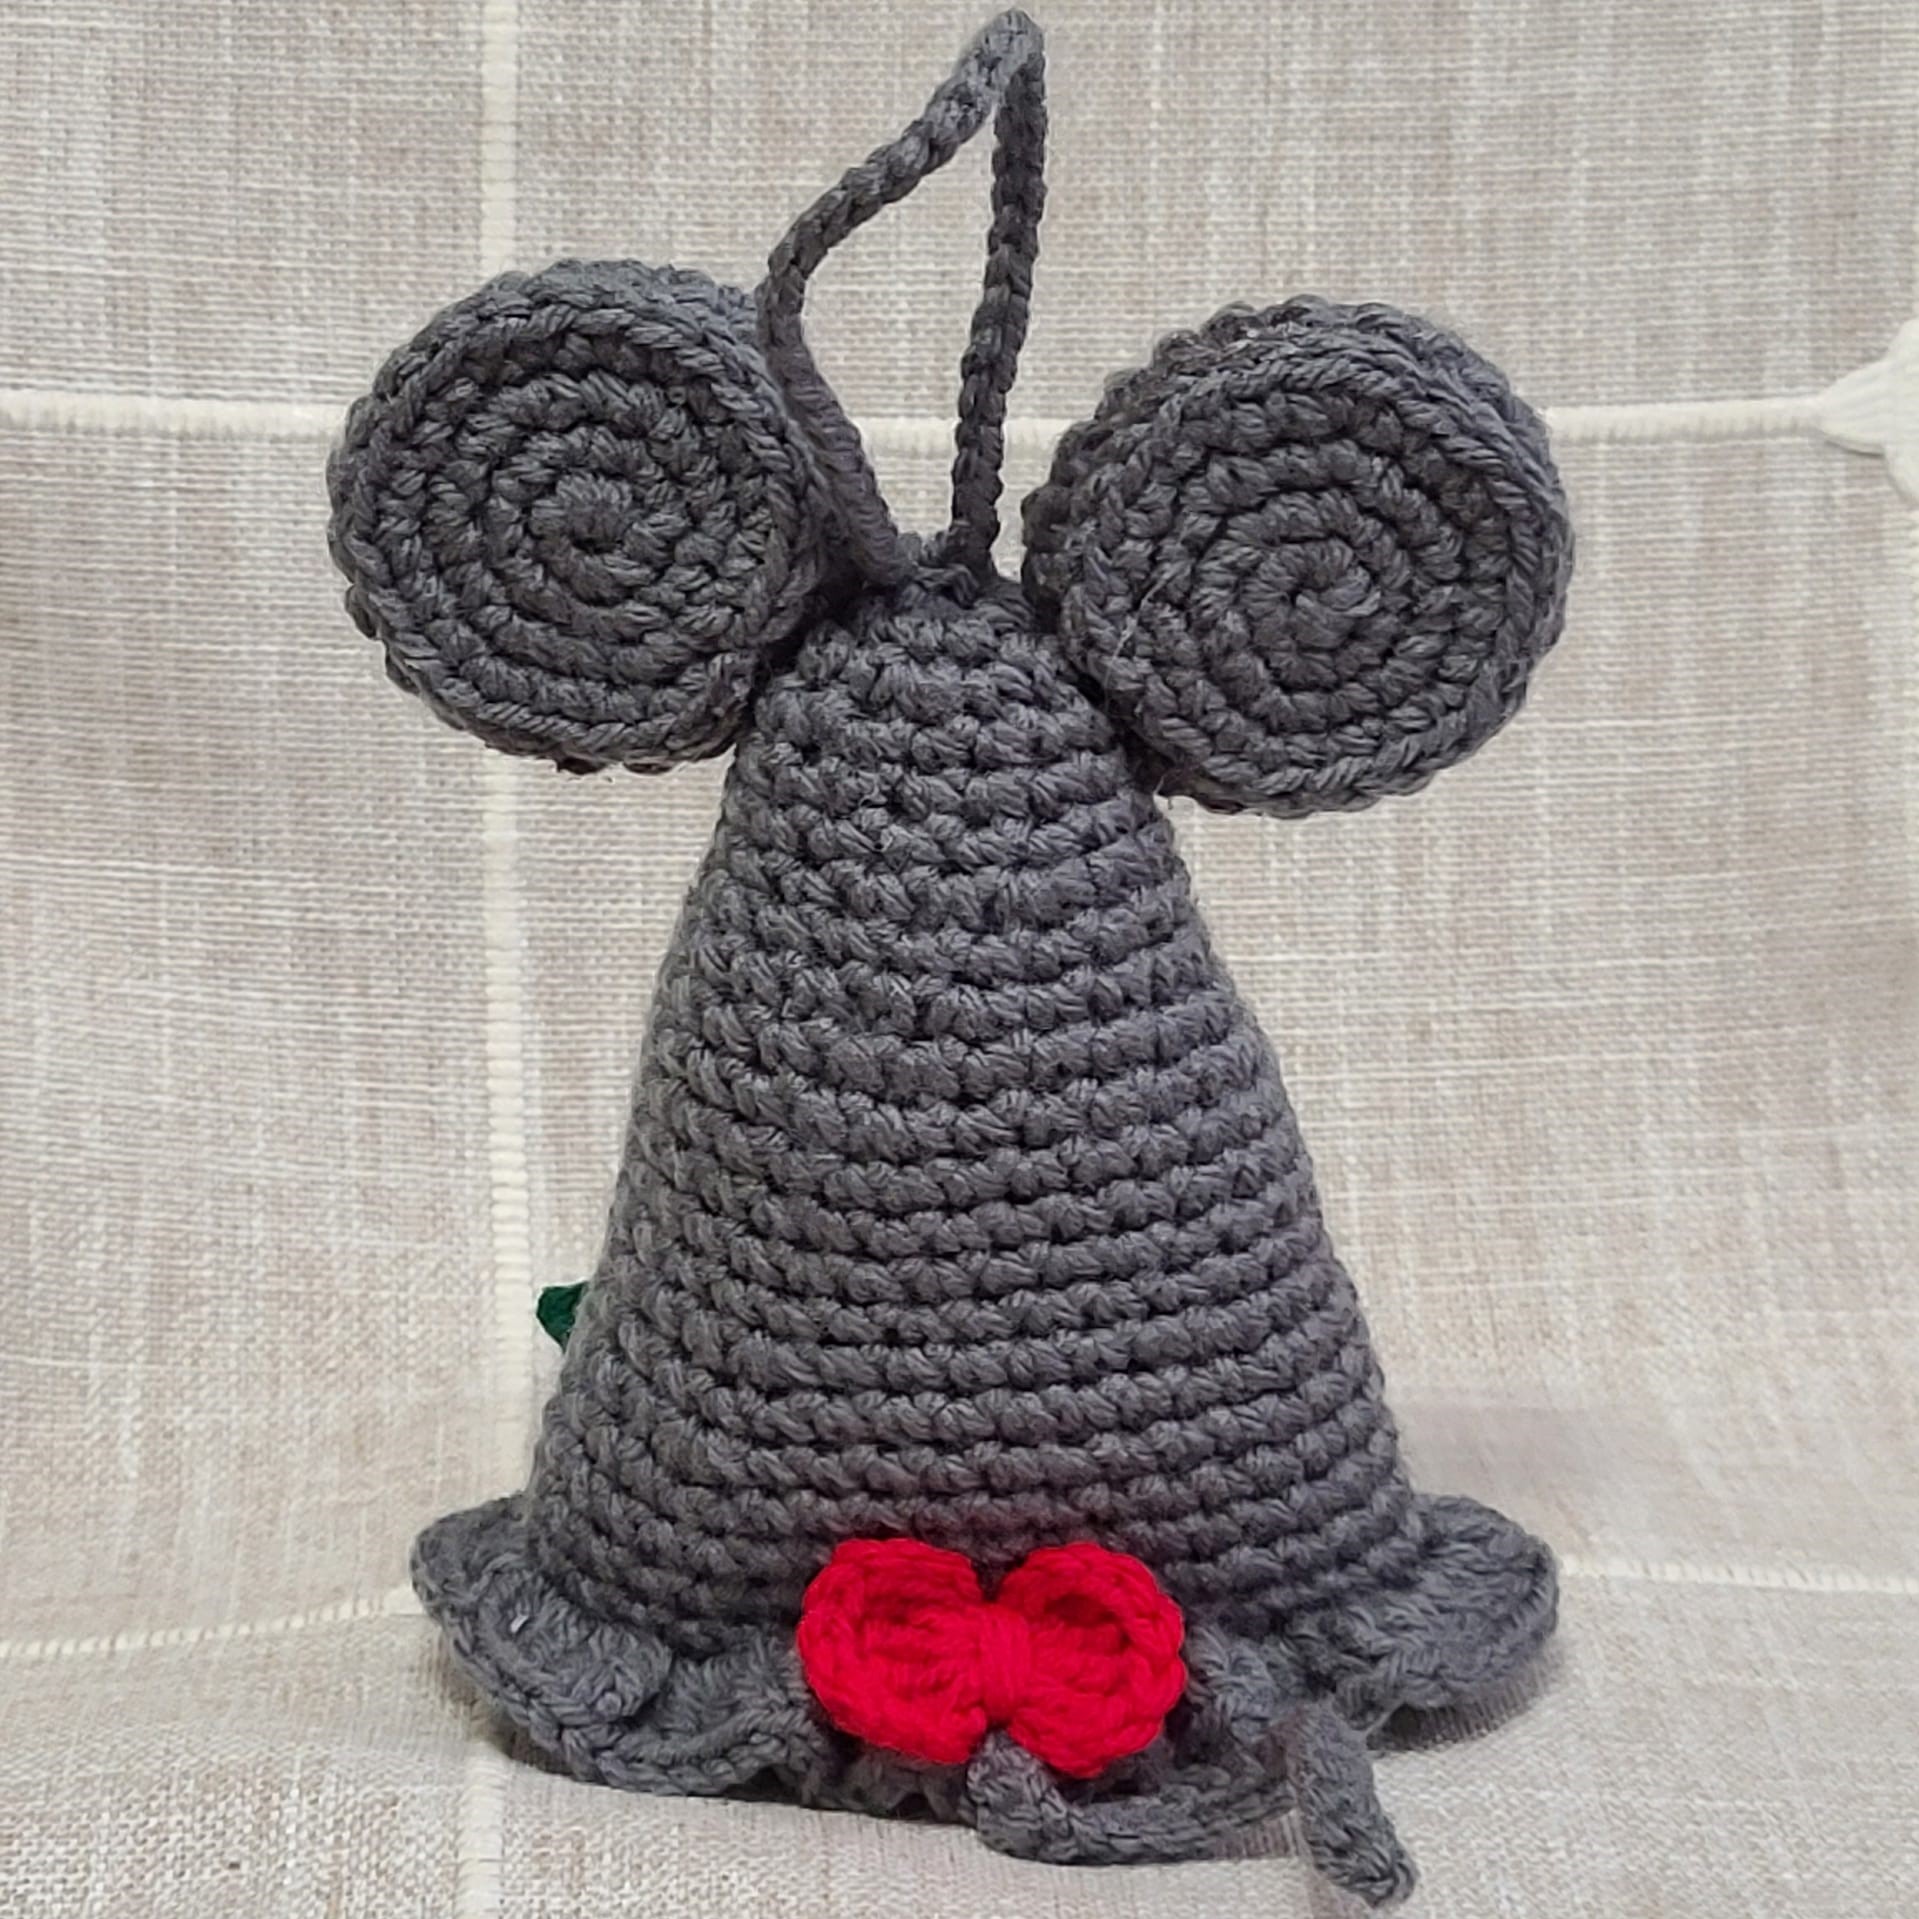 Crochet amigurumi handmade stuffed christmas mouse ornament